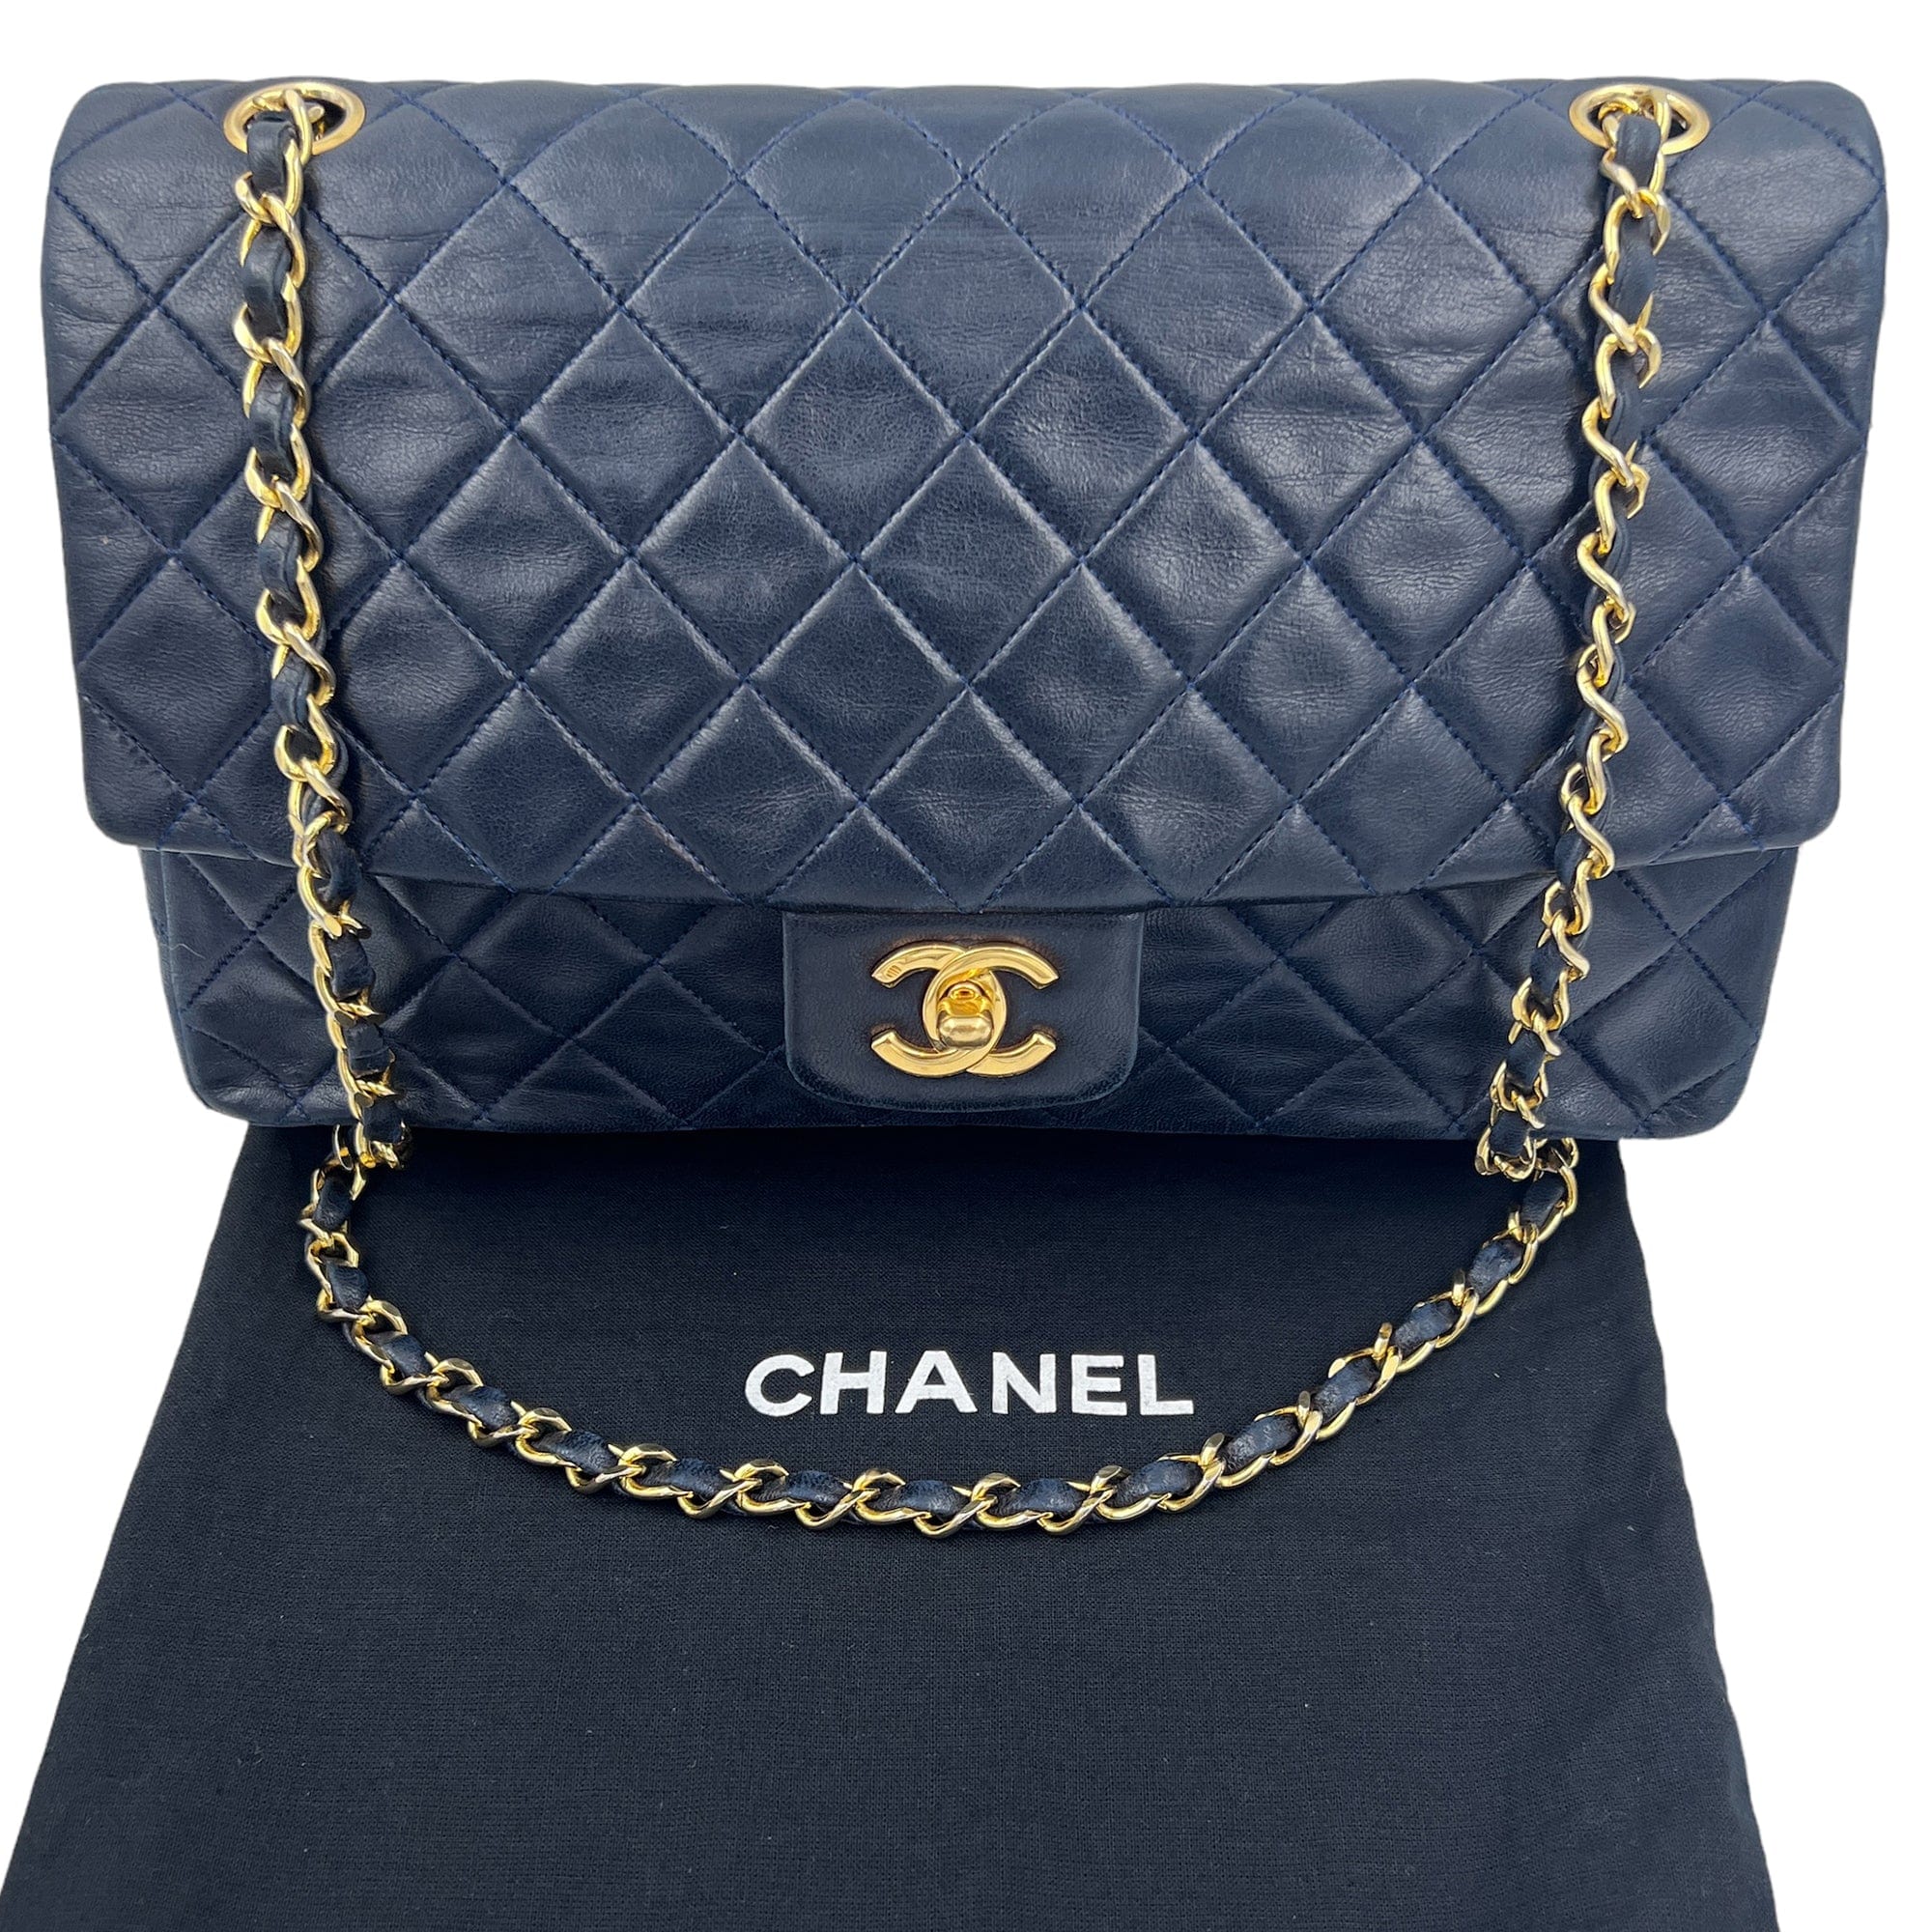 Chanel Classic Vintage Medium Quilted Leather Flap Shoulder Bag - Midnight Blue/Black